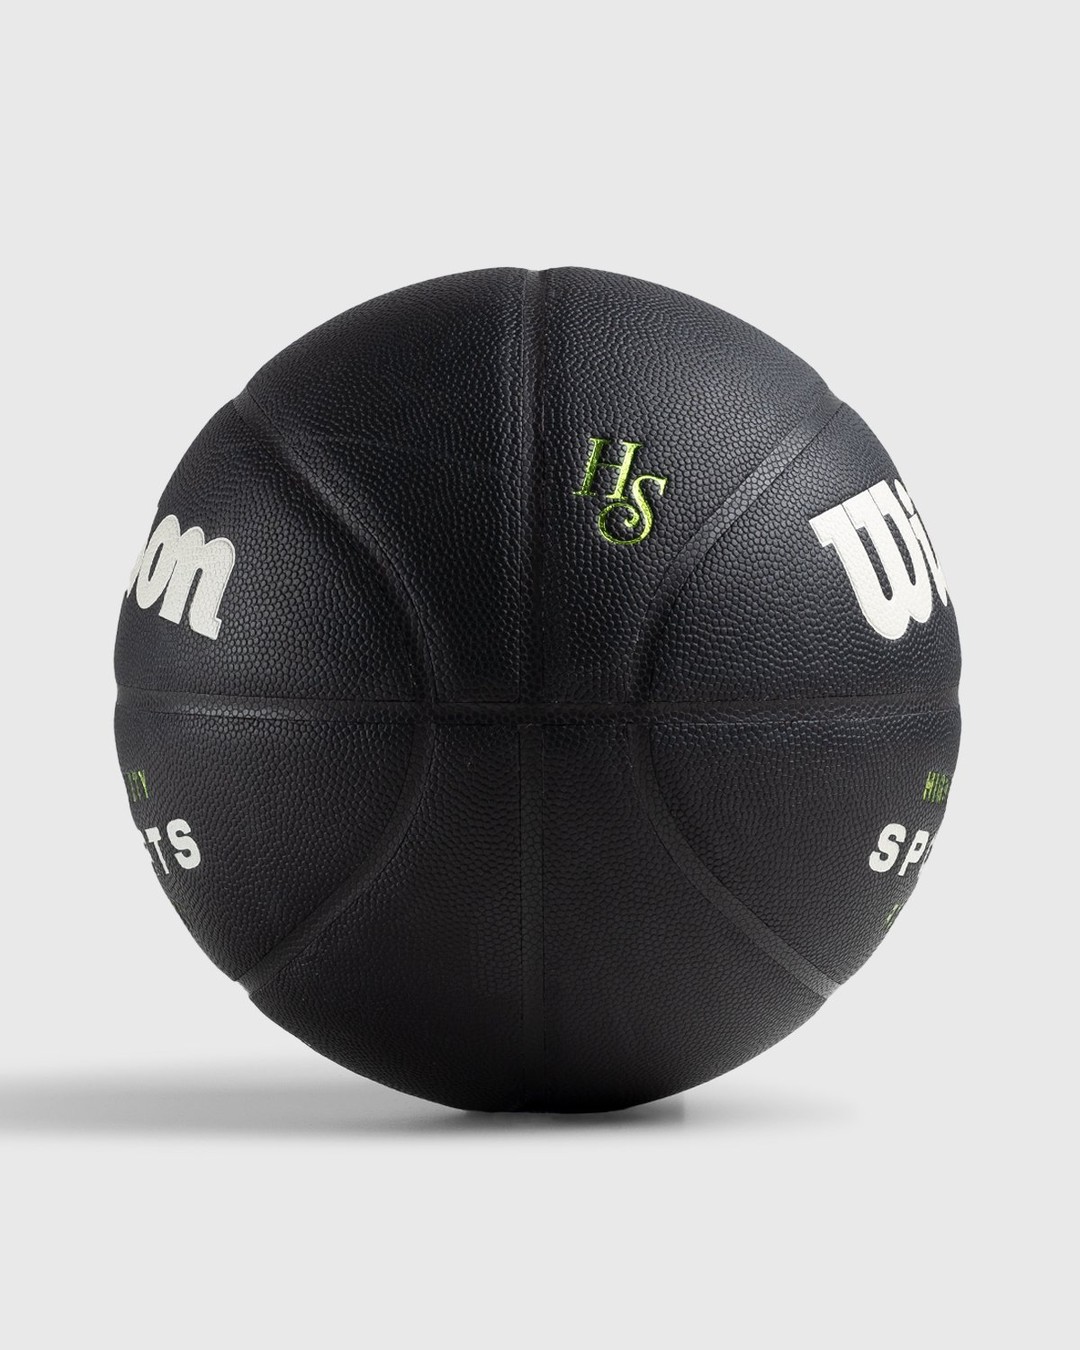 Wilson x Highsnobiety – HS Sports Basketball Black - Sports Gear - Black - Image 2